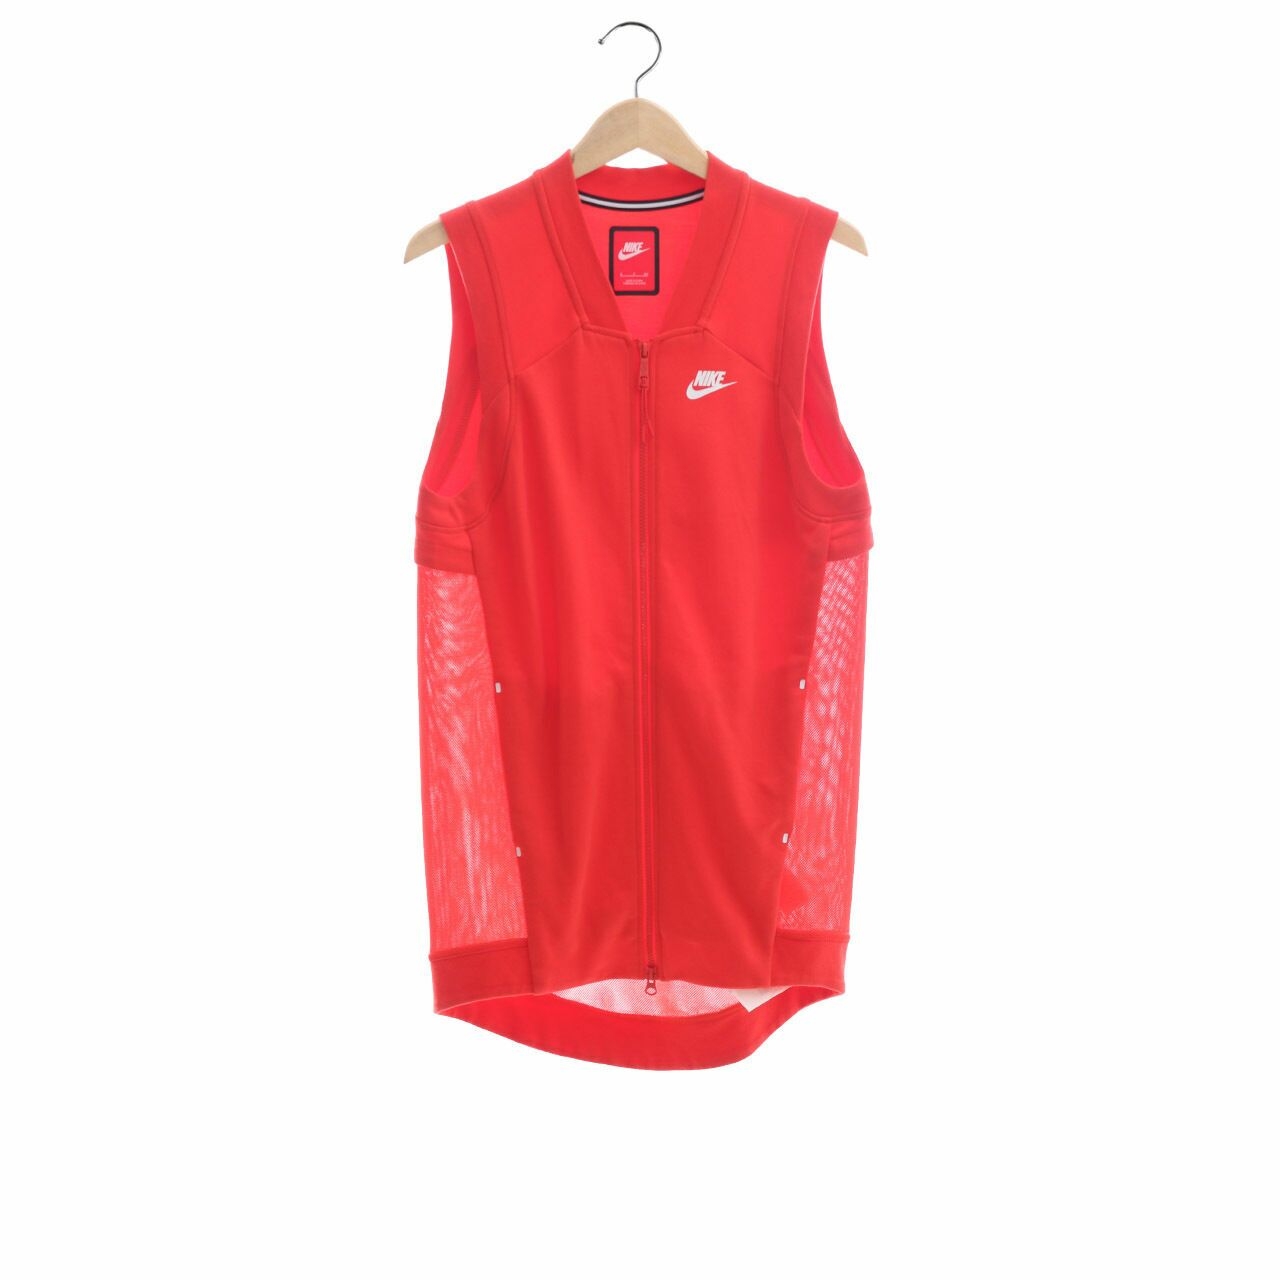 Nike Tech Fleece Cocoon Size Large Red Vest